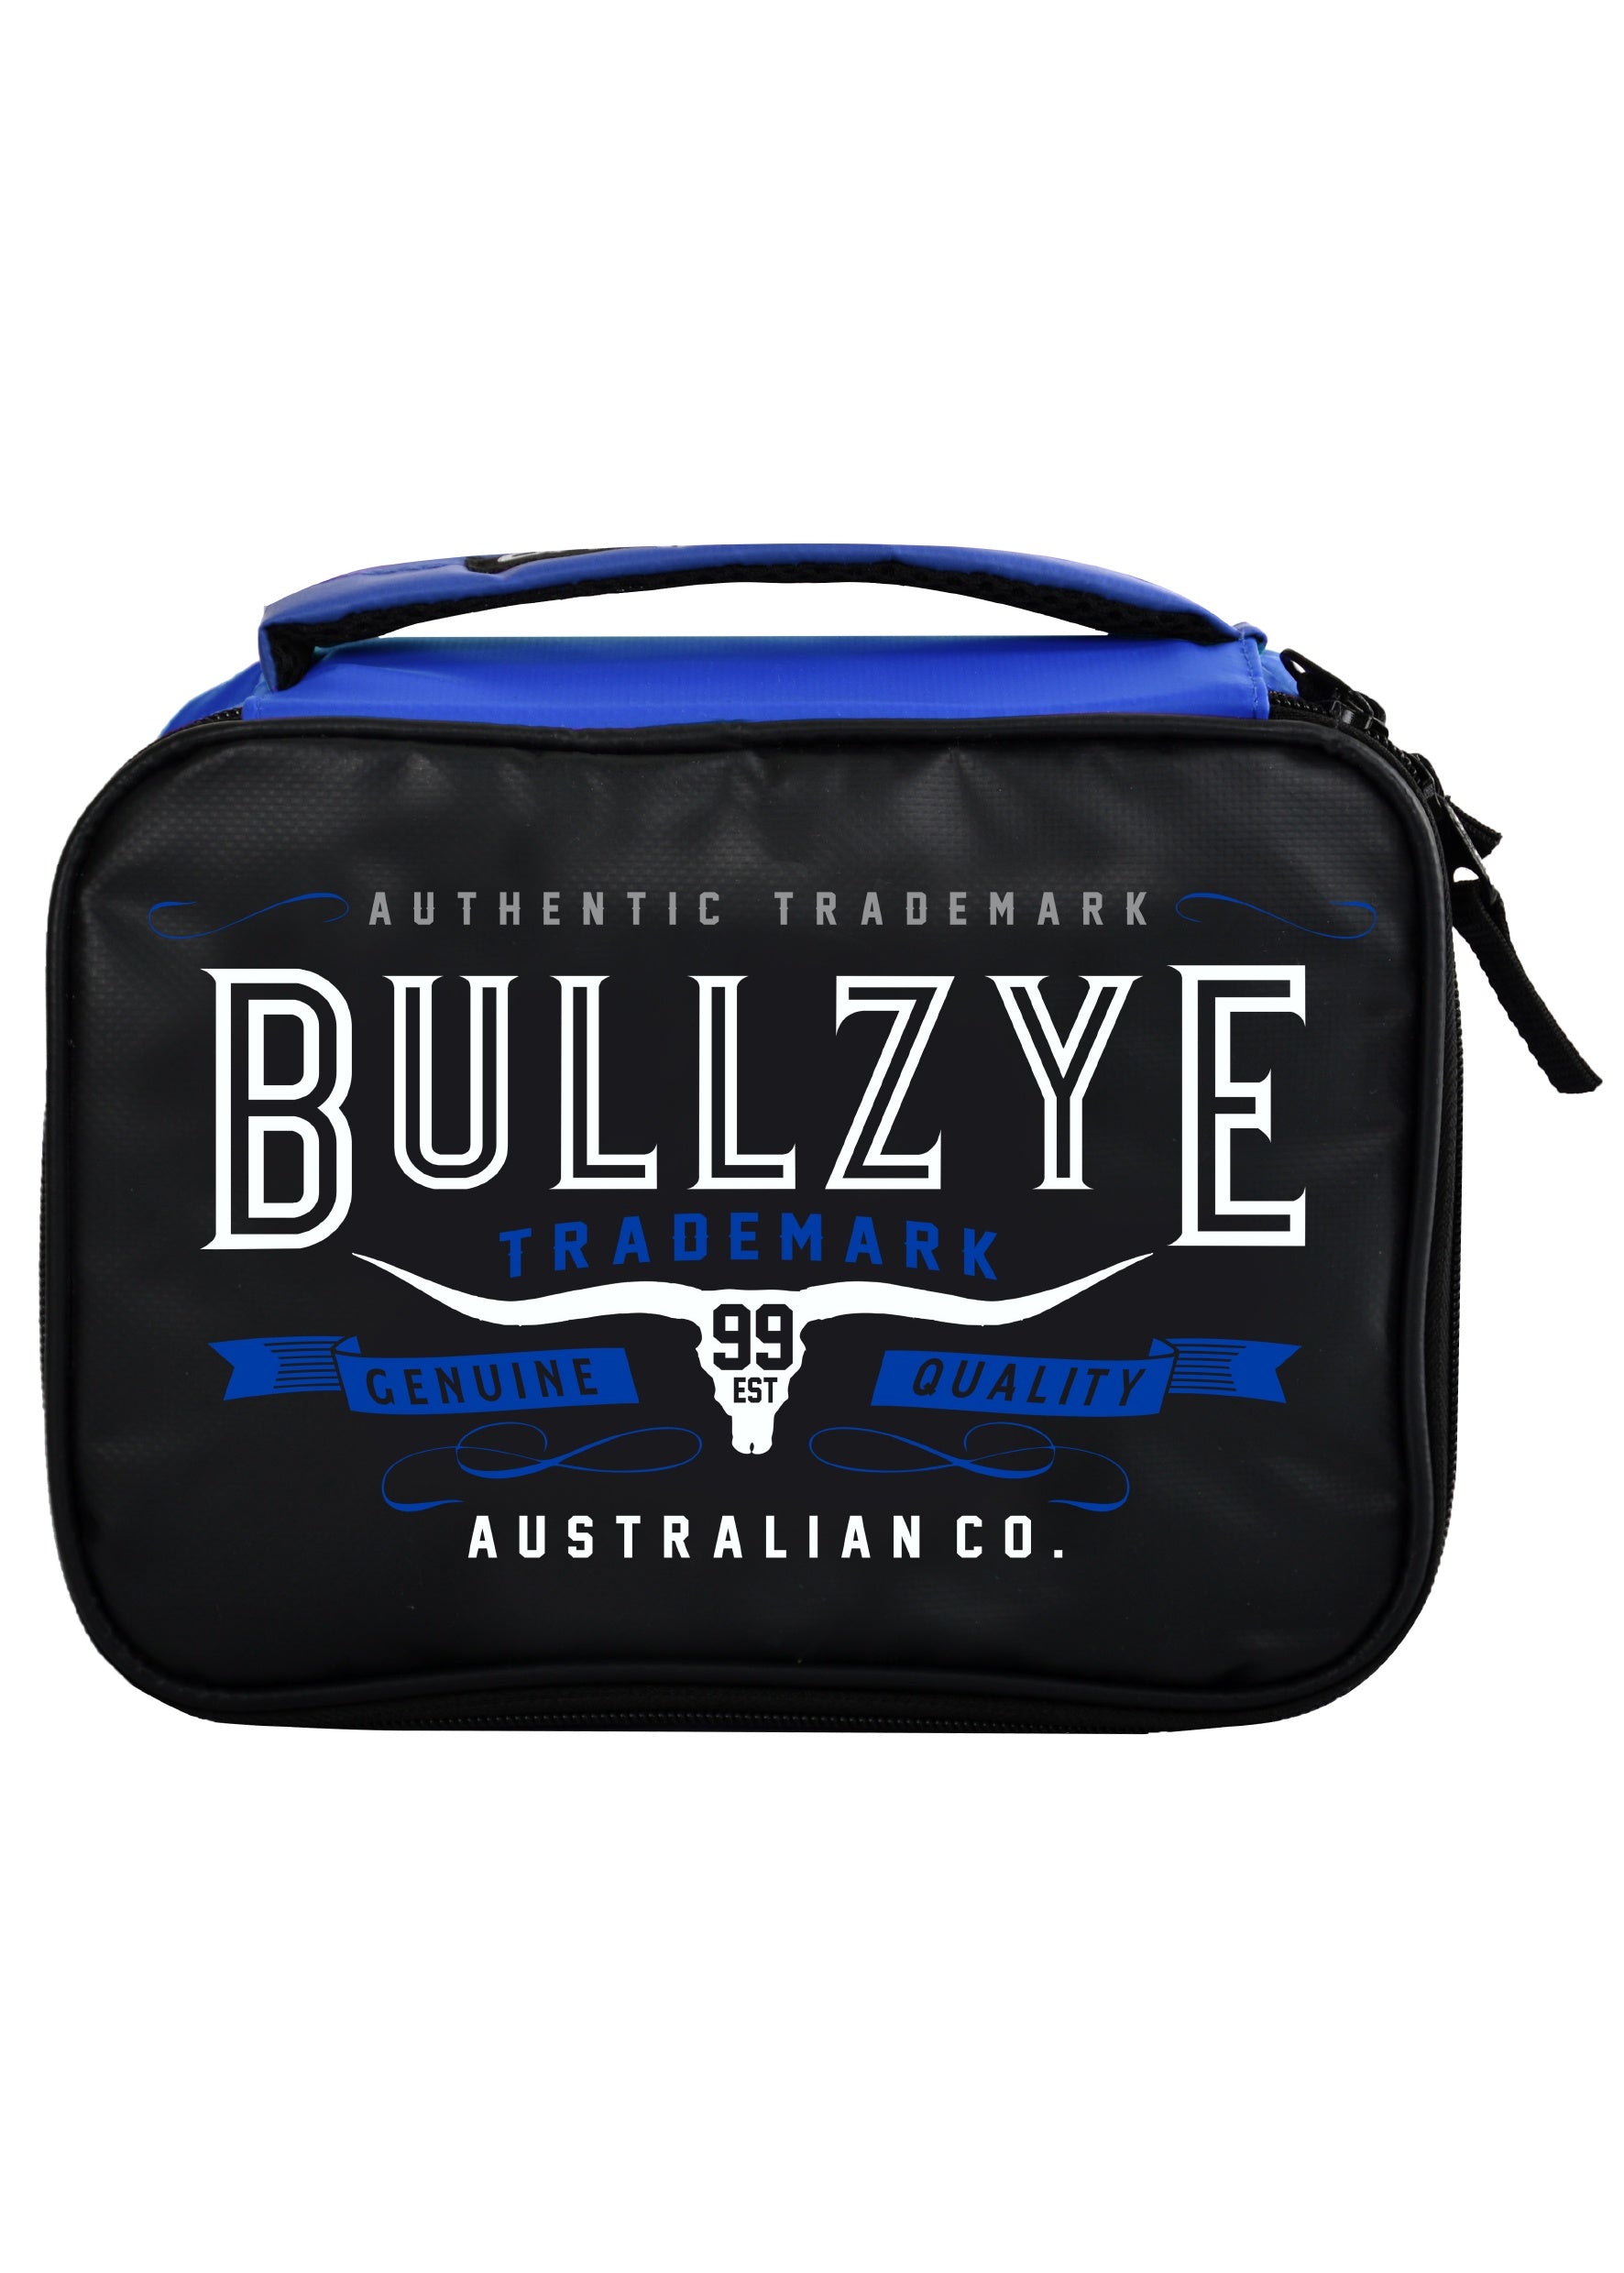 Bullzye Longhorn Lunchbox- Blue S20 (6623908757581)